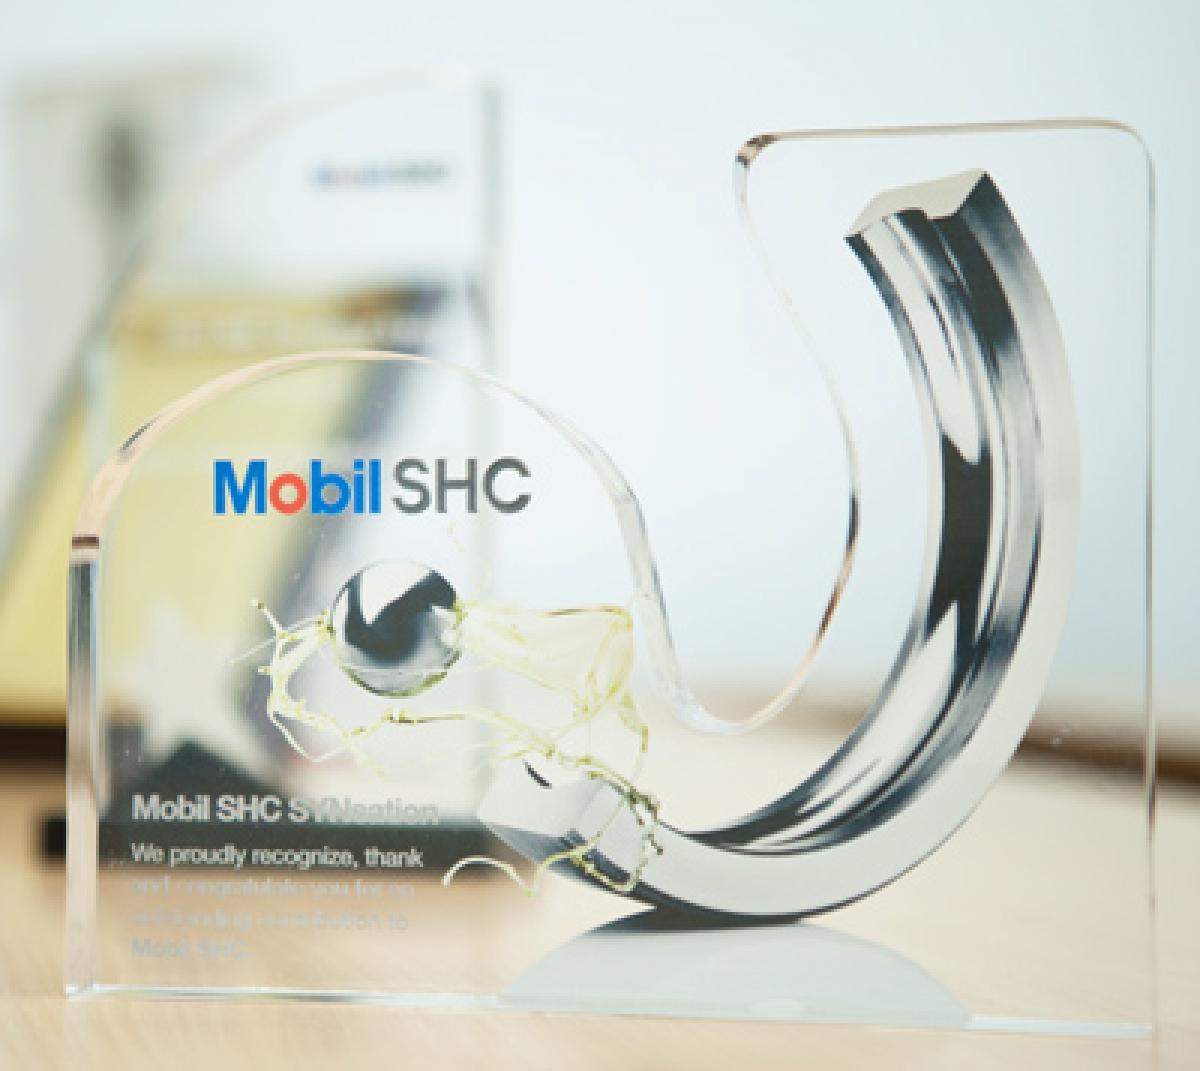 Mobil SHC SYNsation Award